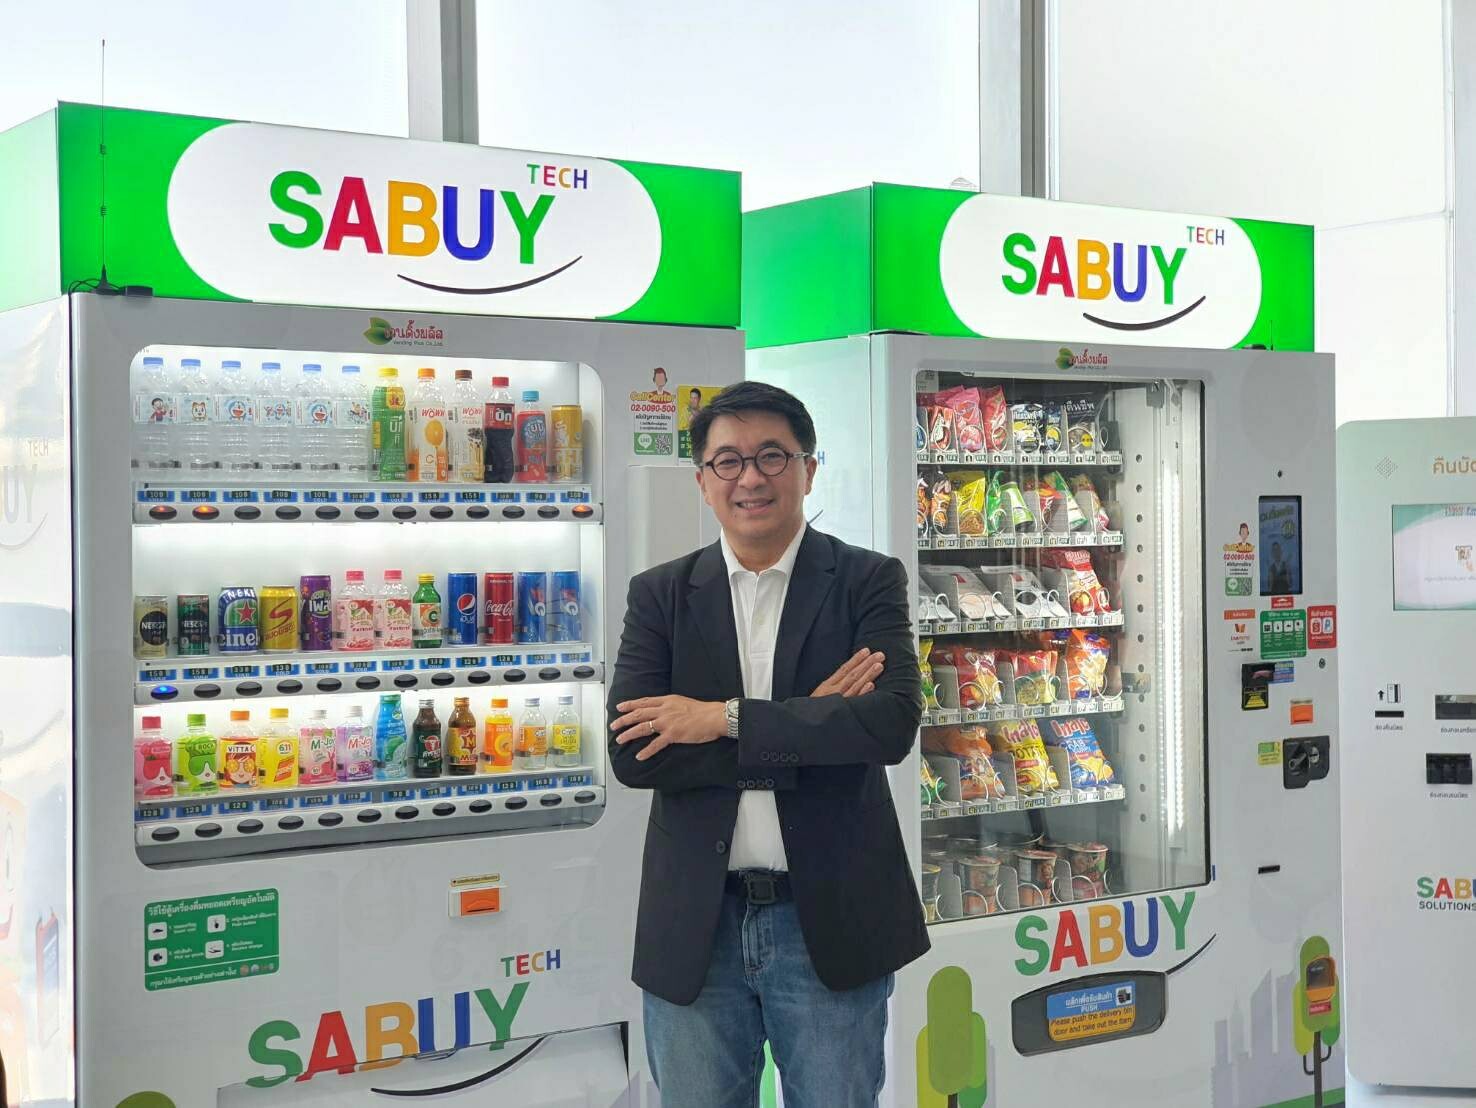 SABUY Solutions เชื่อมออฟไลน์สู่ออนไลน์ ผนึก Foodville ยักษ์ใหญ่ธุรกิจ  One-stop Food Supply Service เปิดตลาดสดบนมือถือ "SABUY Food Plus" พร้อมแจกโปรแรง ช้อป 500 รับเงินคืน 50 บาท ไม่จำกัดครั้งตลอดปี 2564